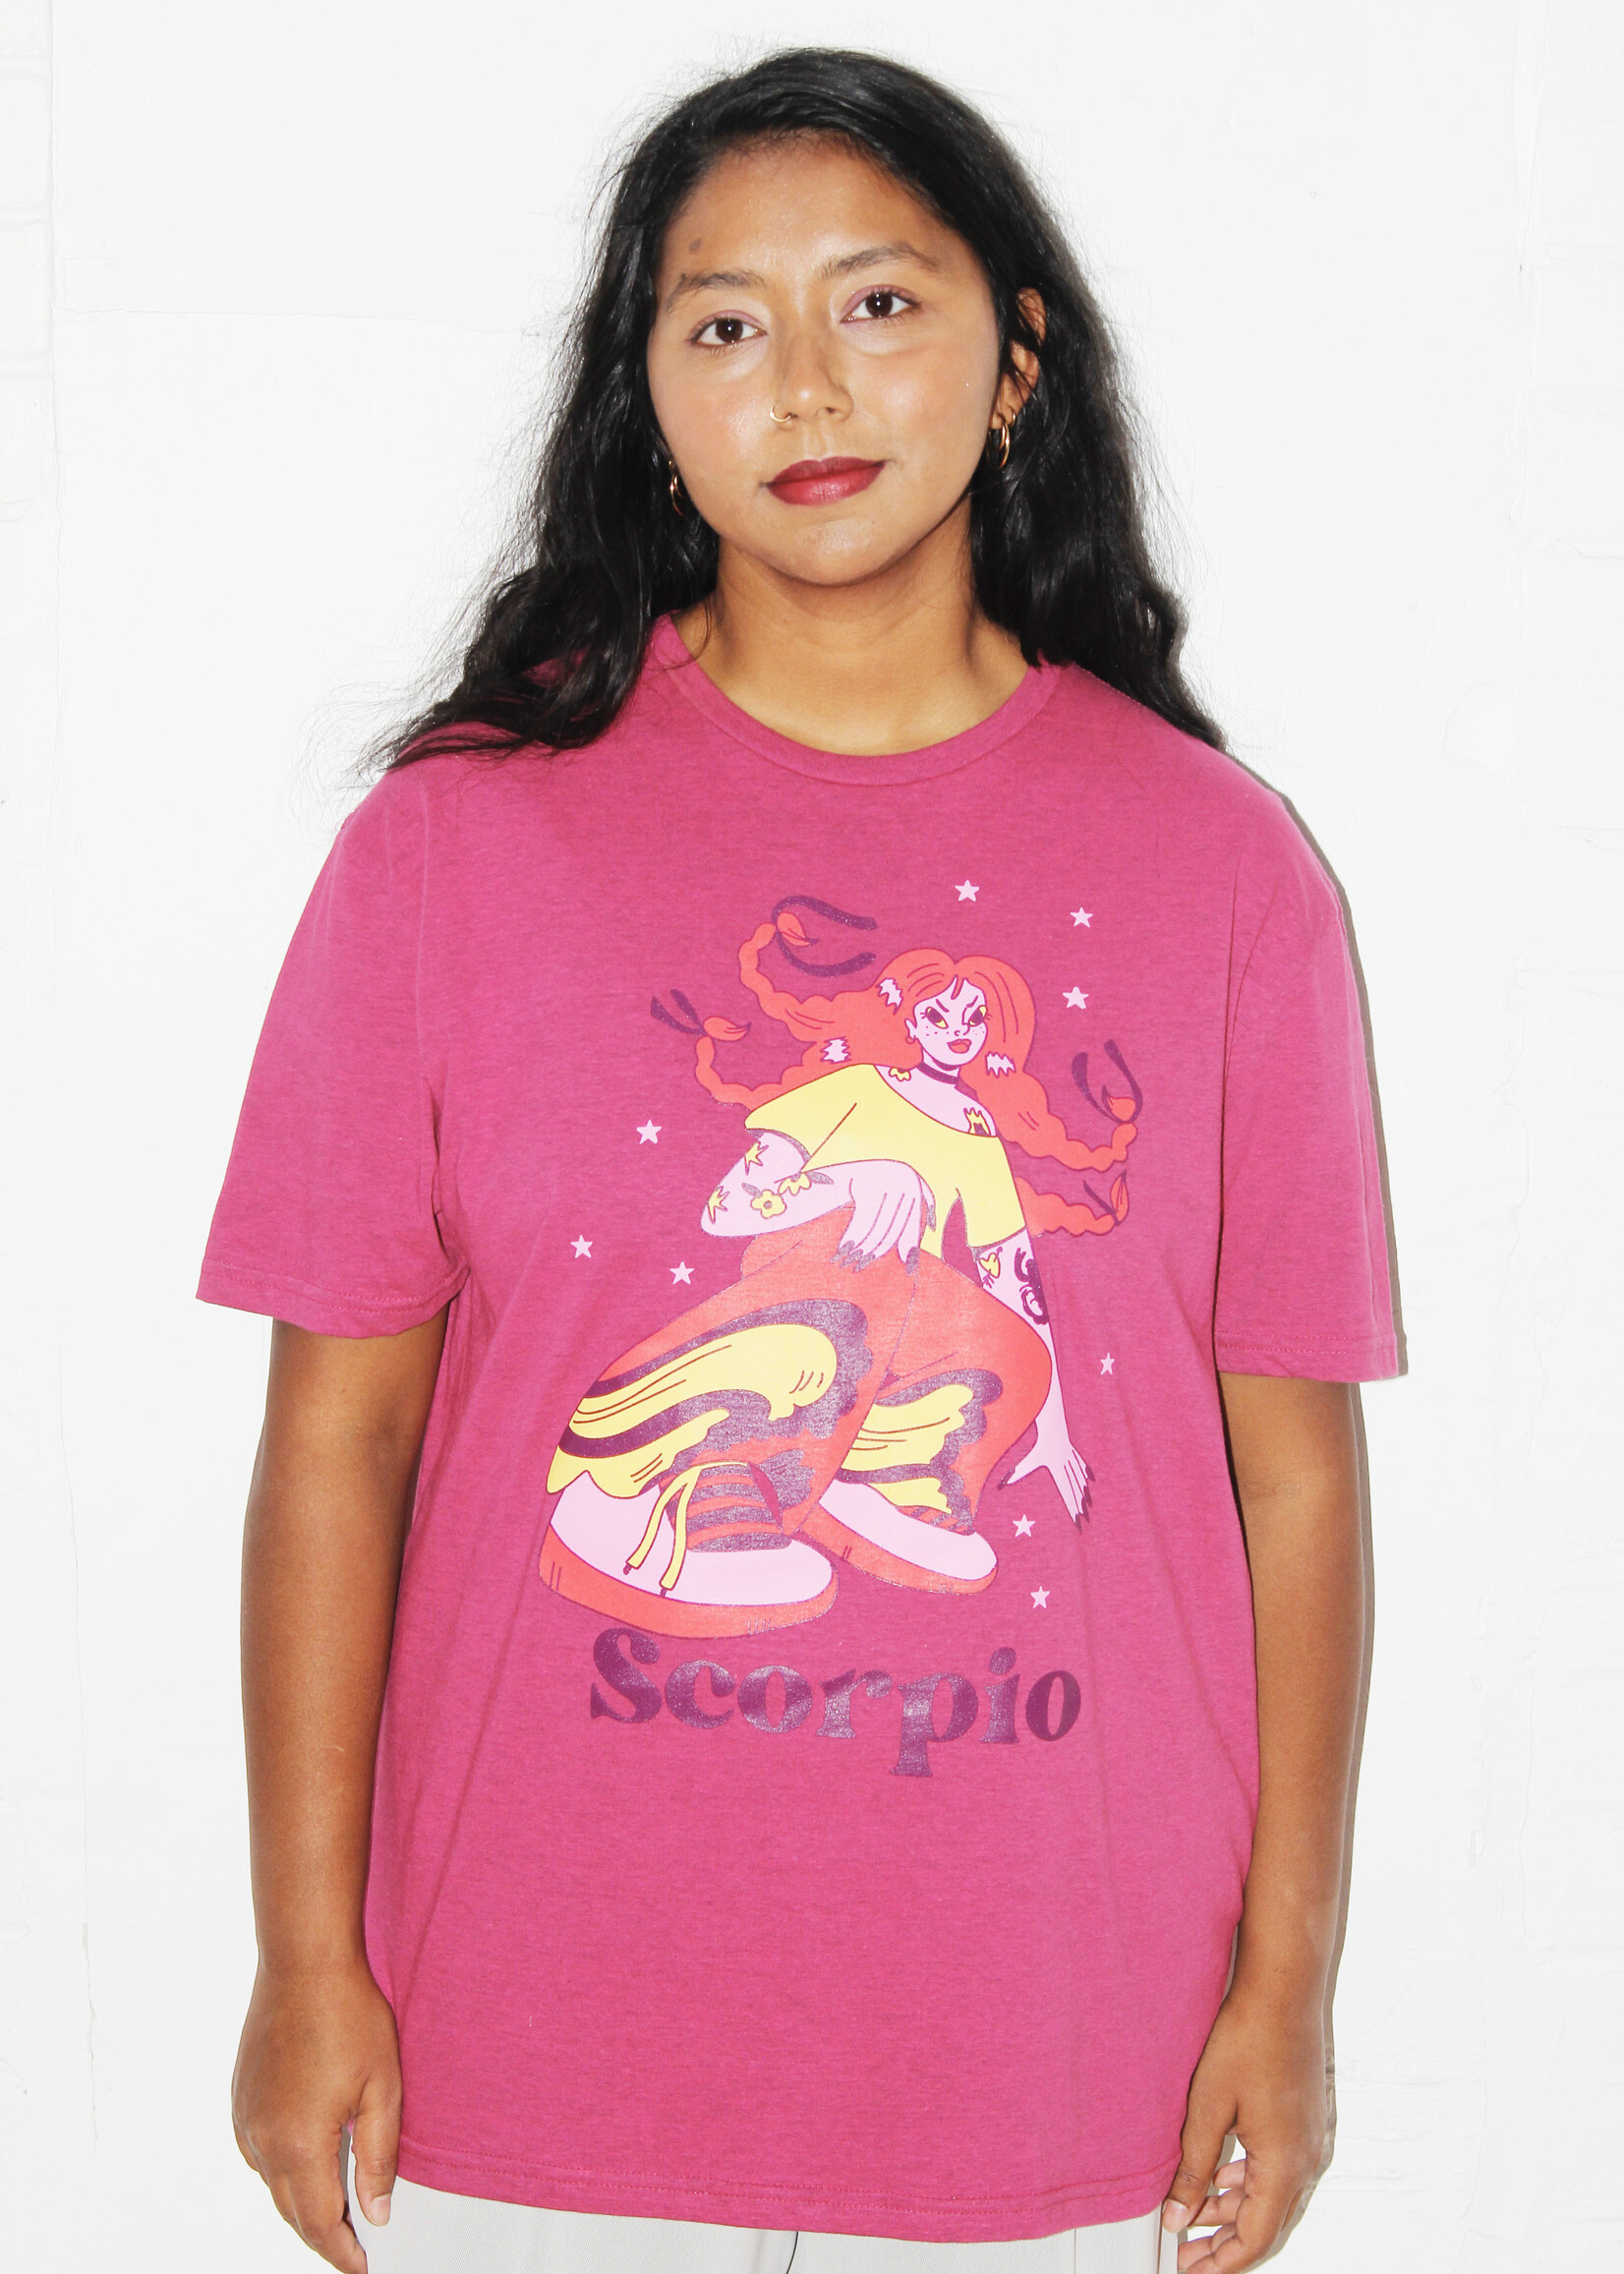 Spll Girl Spll Girl Zodiac T-Shirts: Scorpio